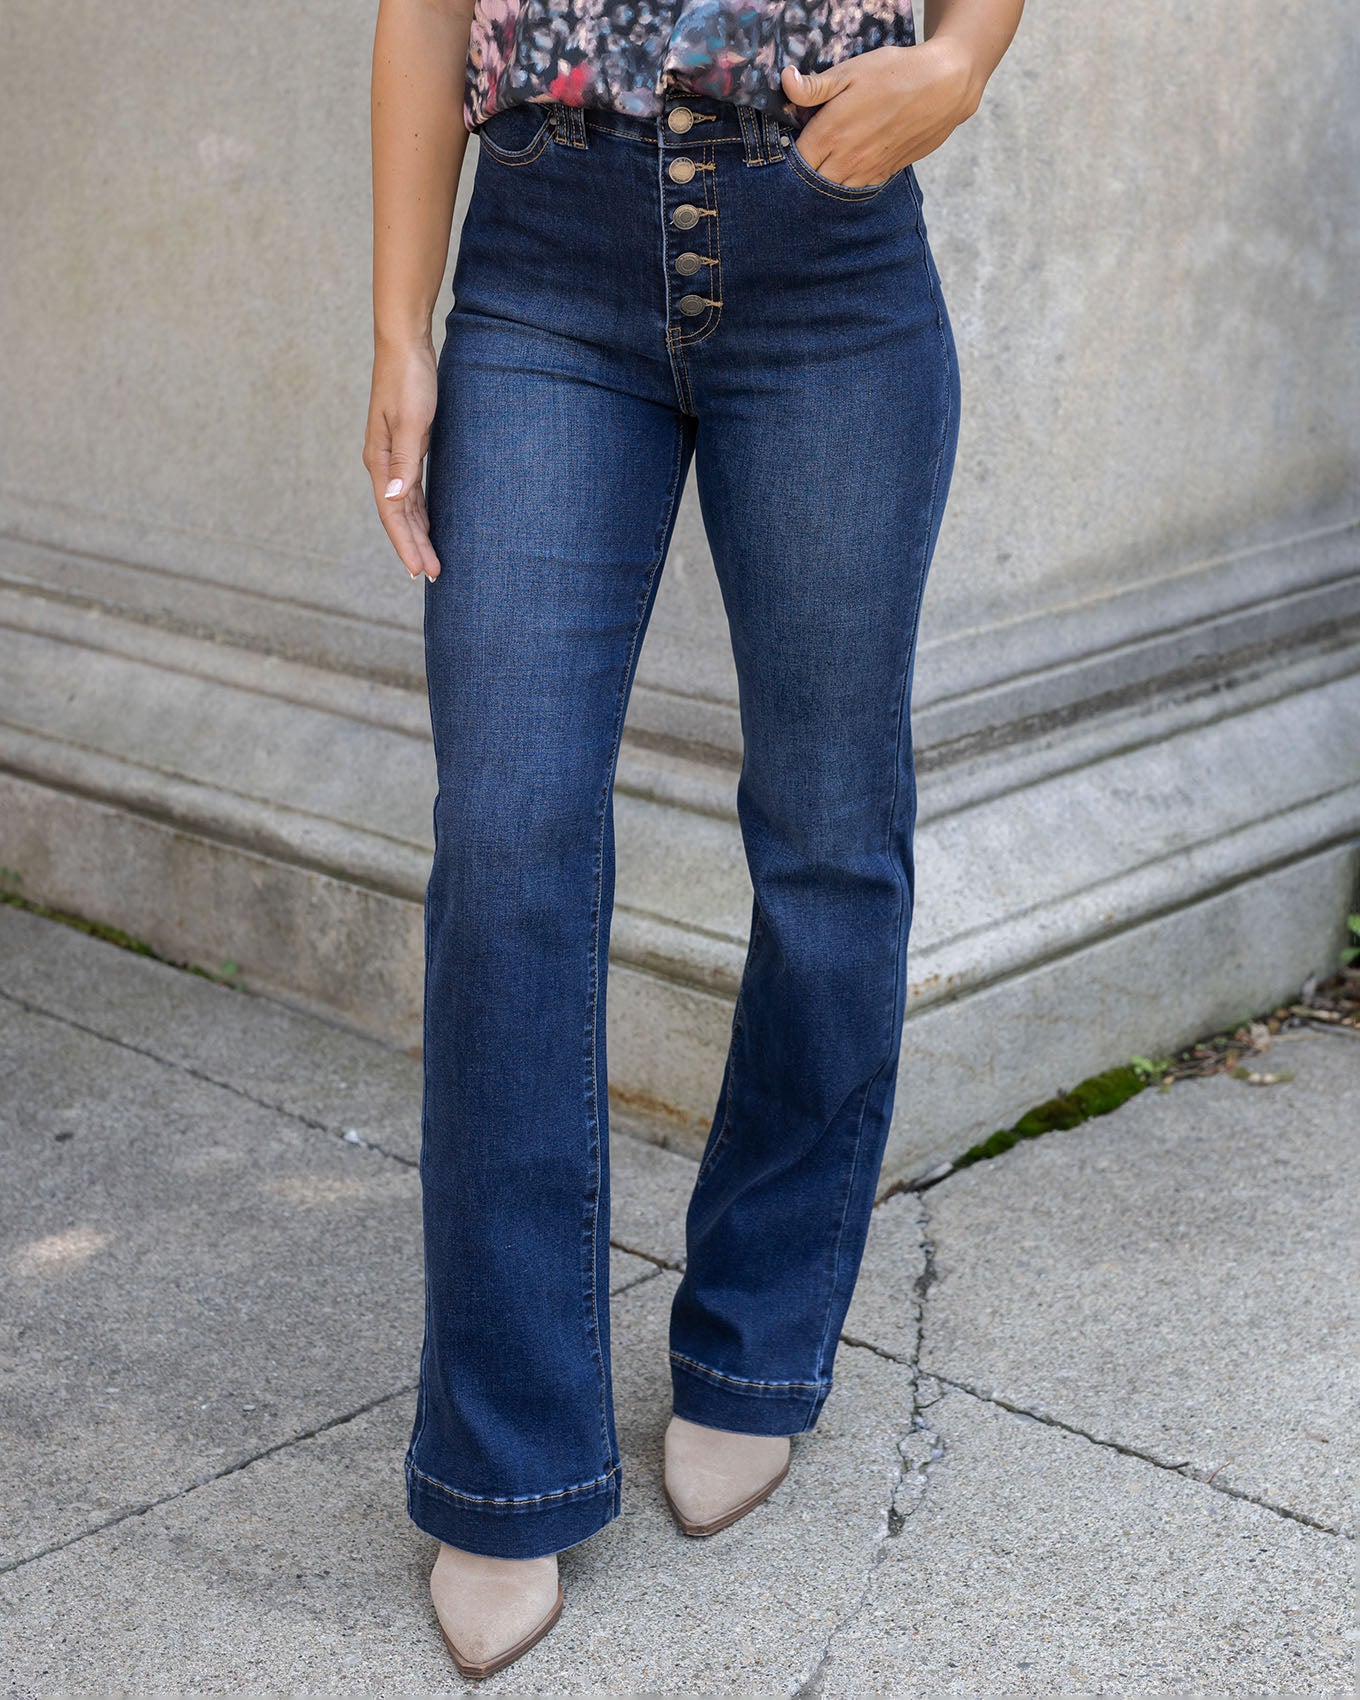 Jeans for Women Women's High Waist Jeans Button Tassel Pants Trousers  Bell-bottom Pants Womens Jeans Blue L 